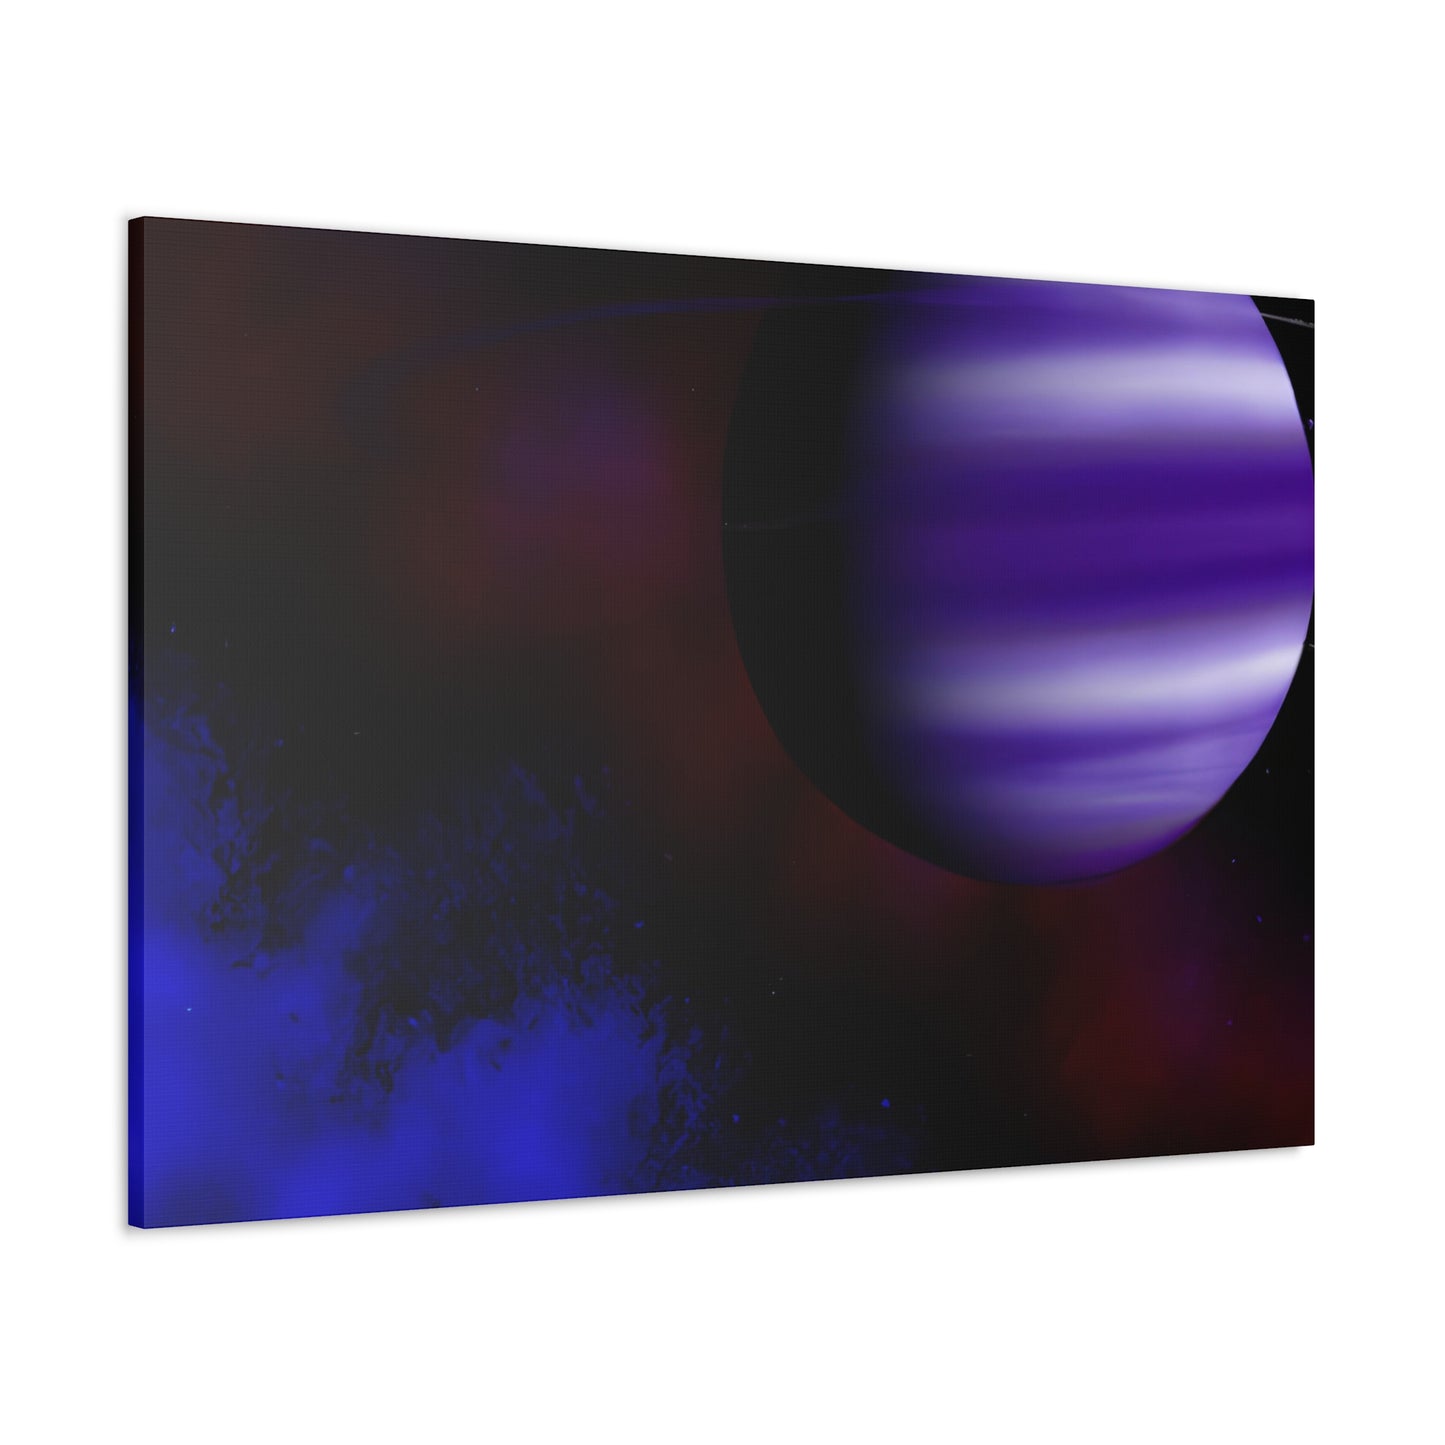 Galactagoddess - Digital Art Canvas